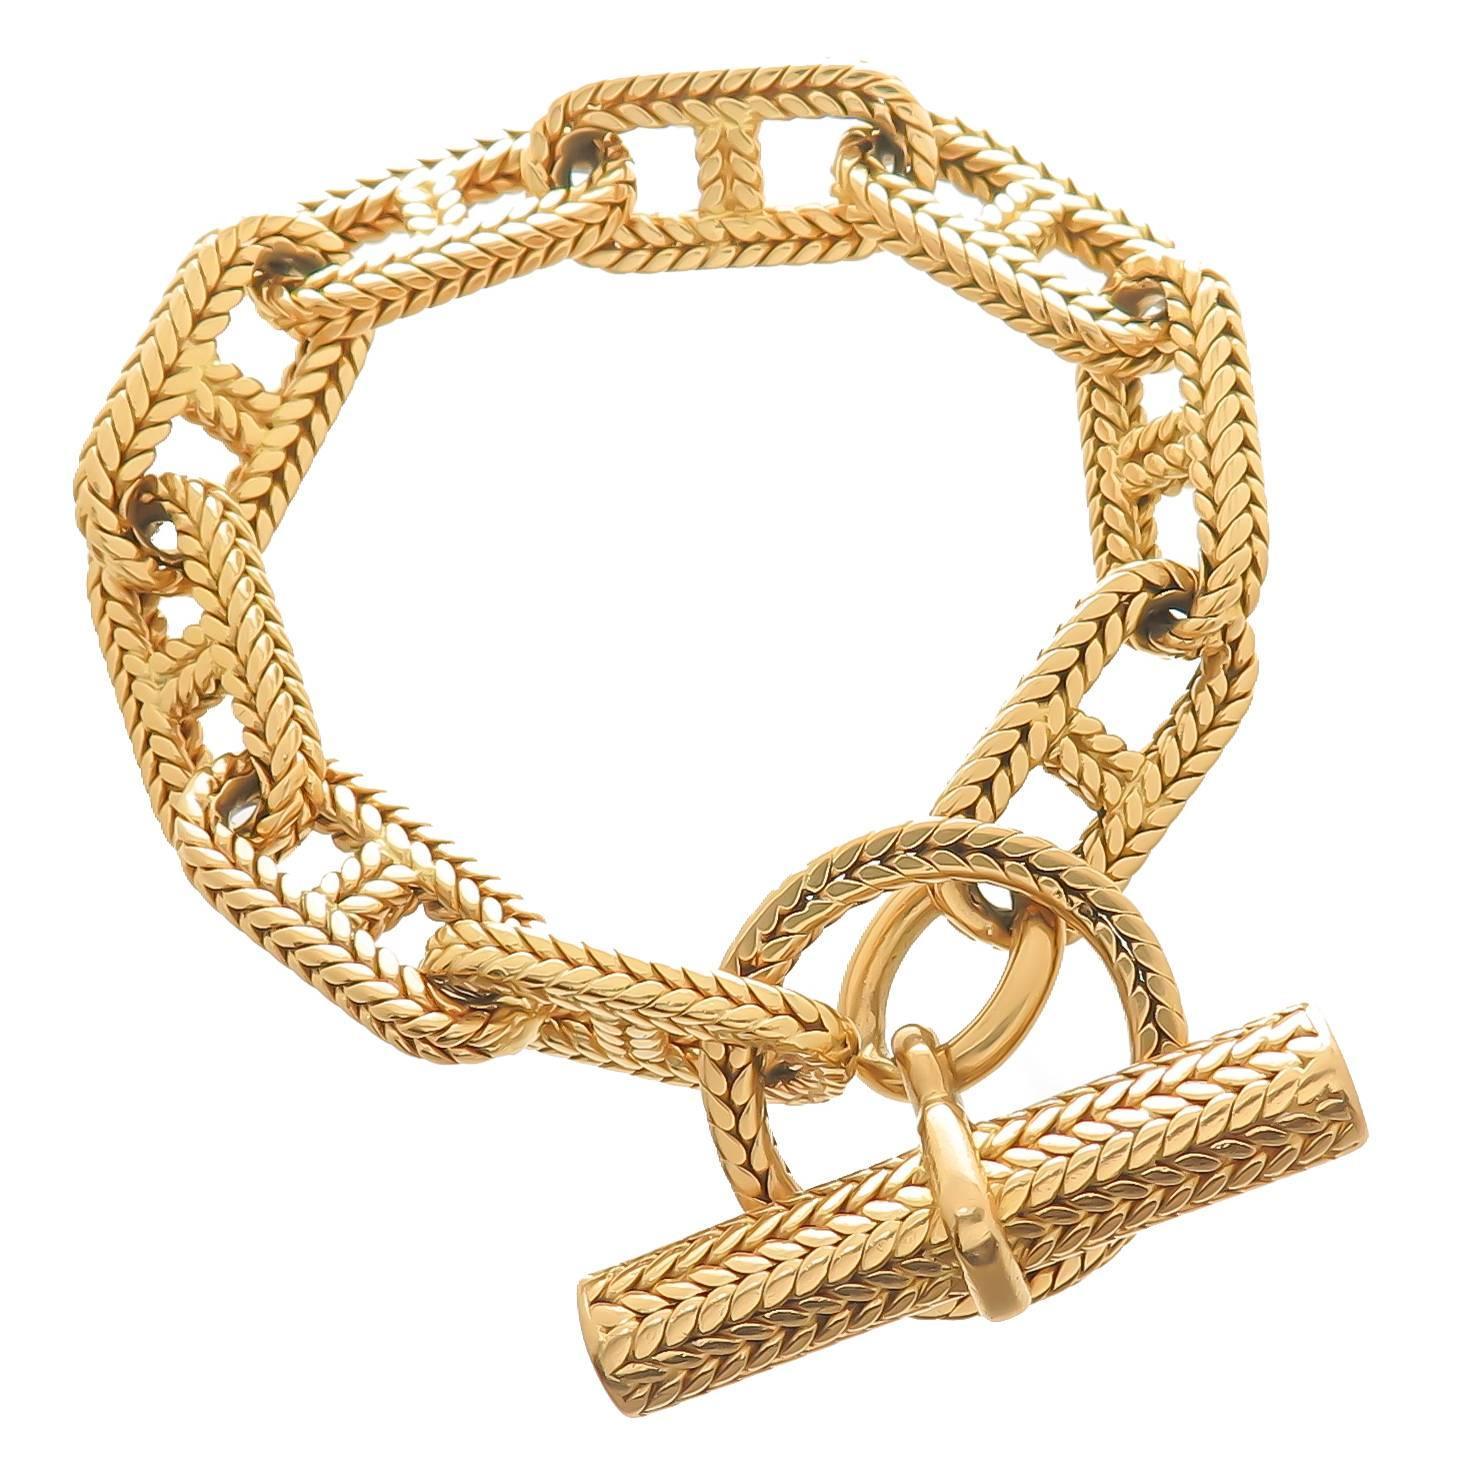 Hermes Gold Chaine D' Ancre Large Link Bracelet at 1stdibs